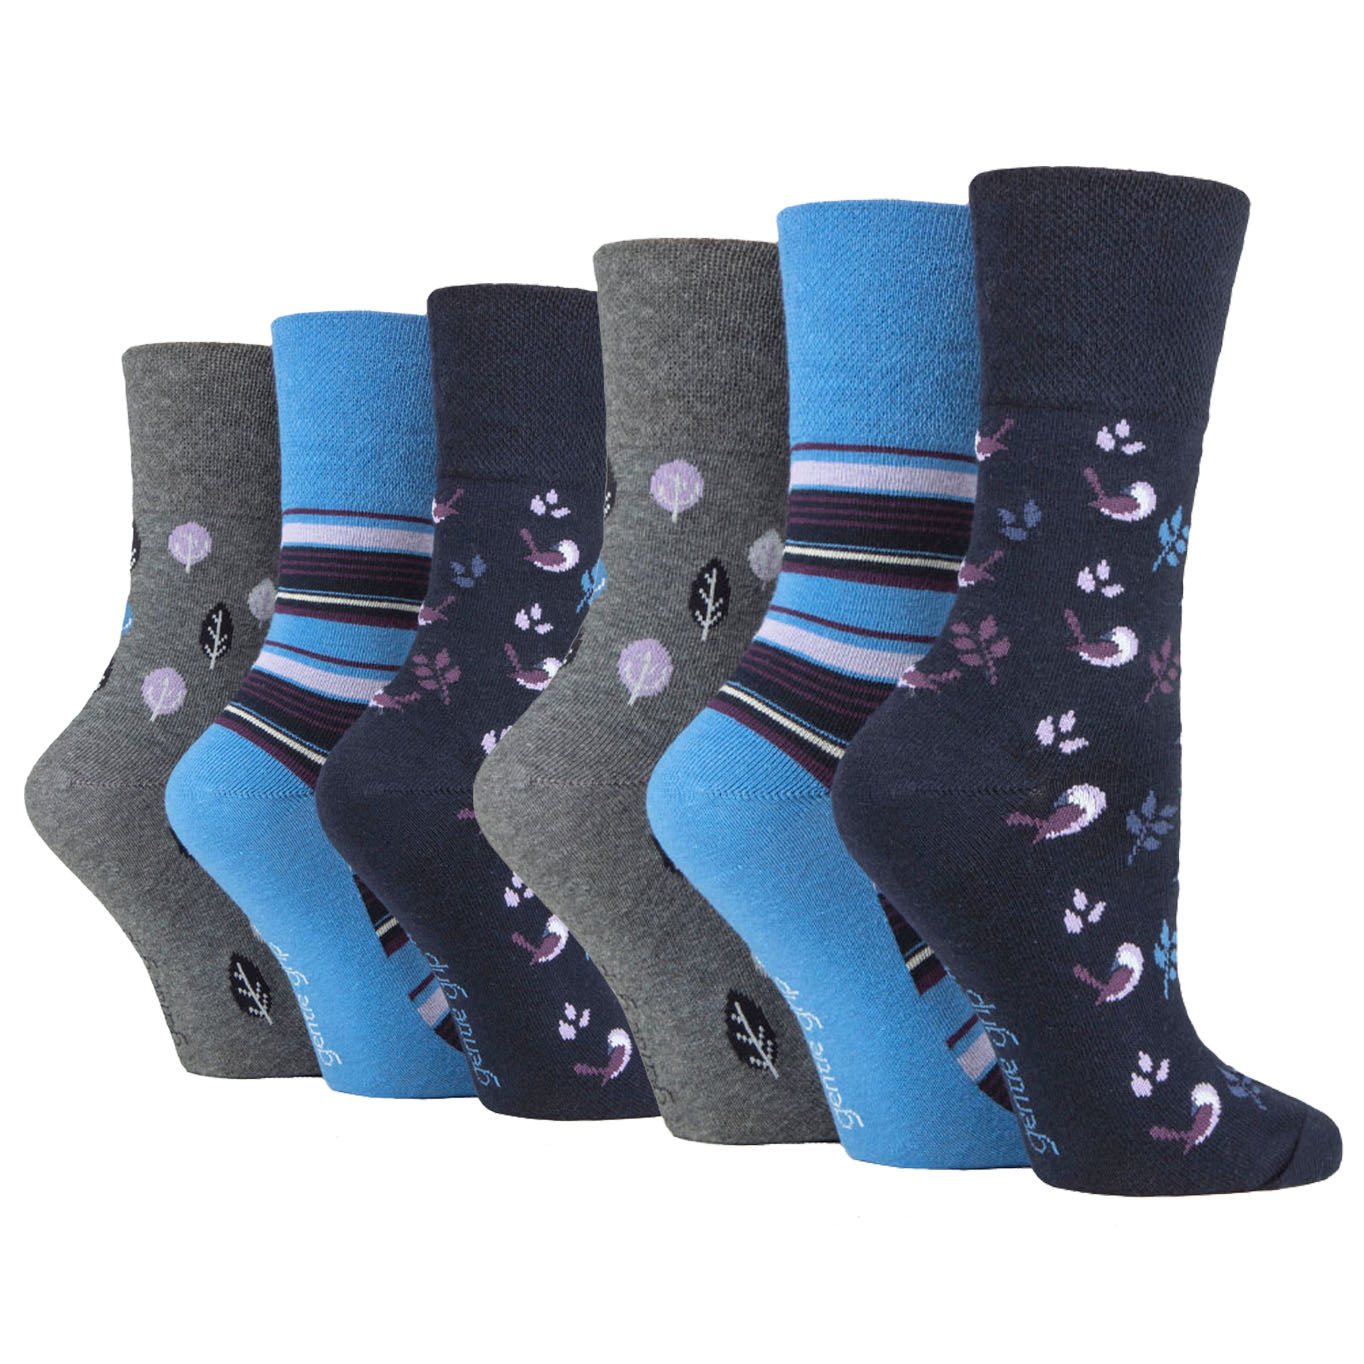 6 Pairs Ladies Gentle Grip Cotton Socks Nature Bird Navy Blue